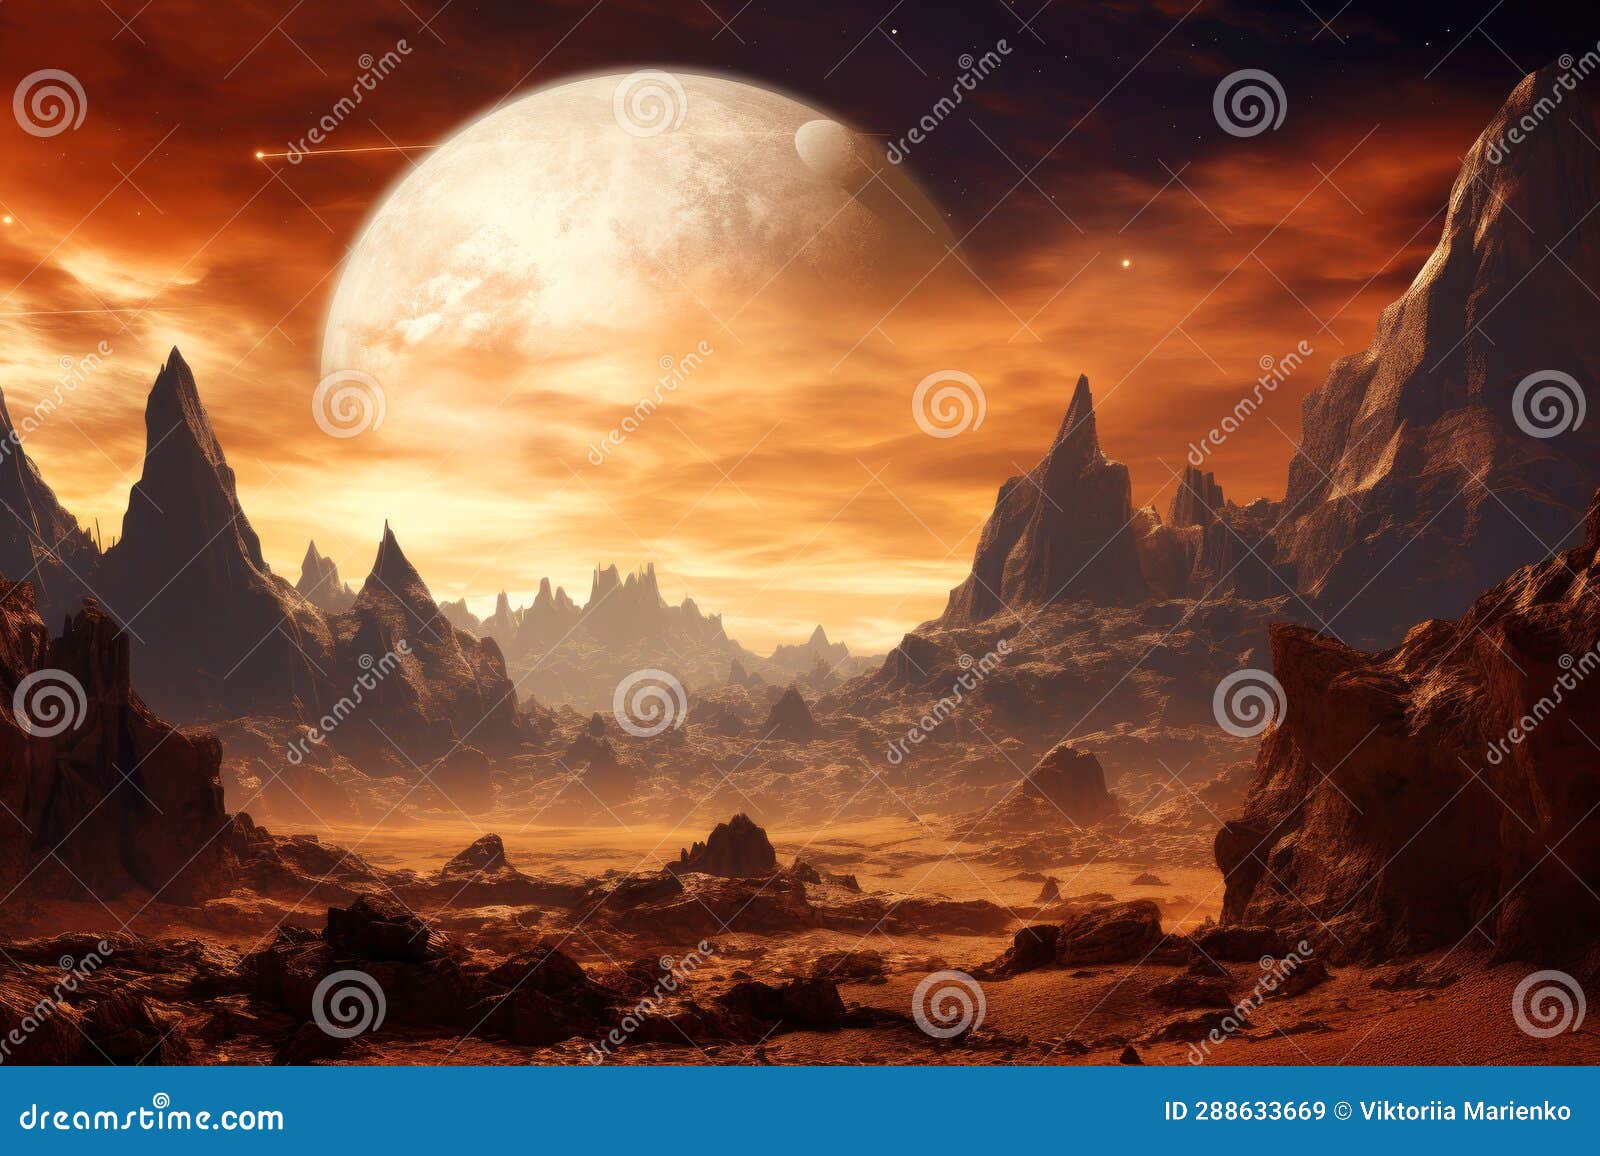 epic fantasia: surreal extraterrestrial landscape unveiled